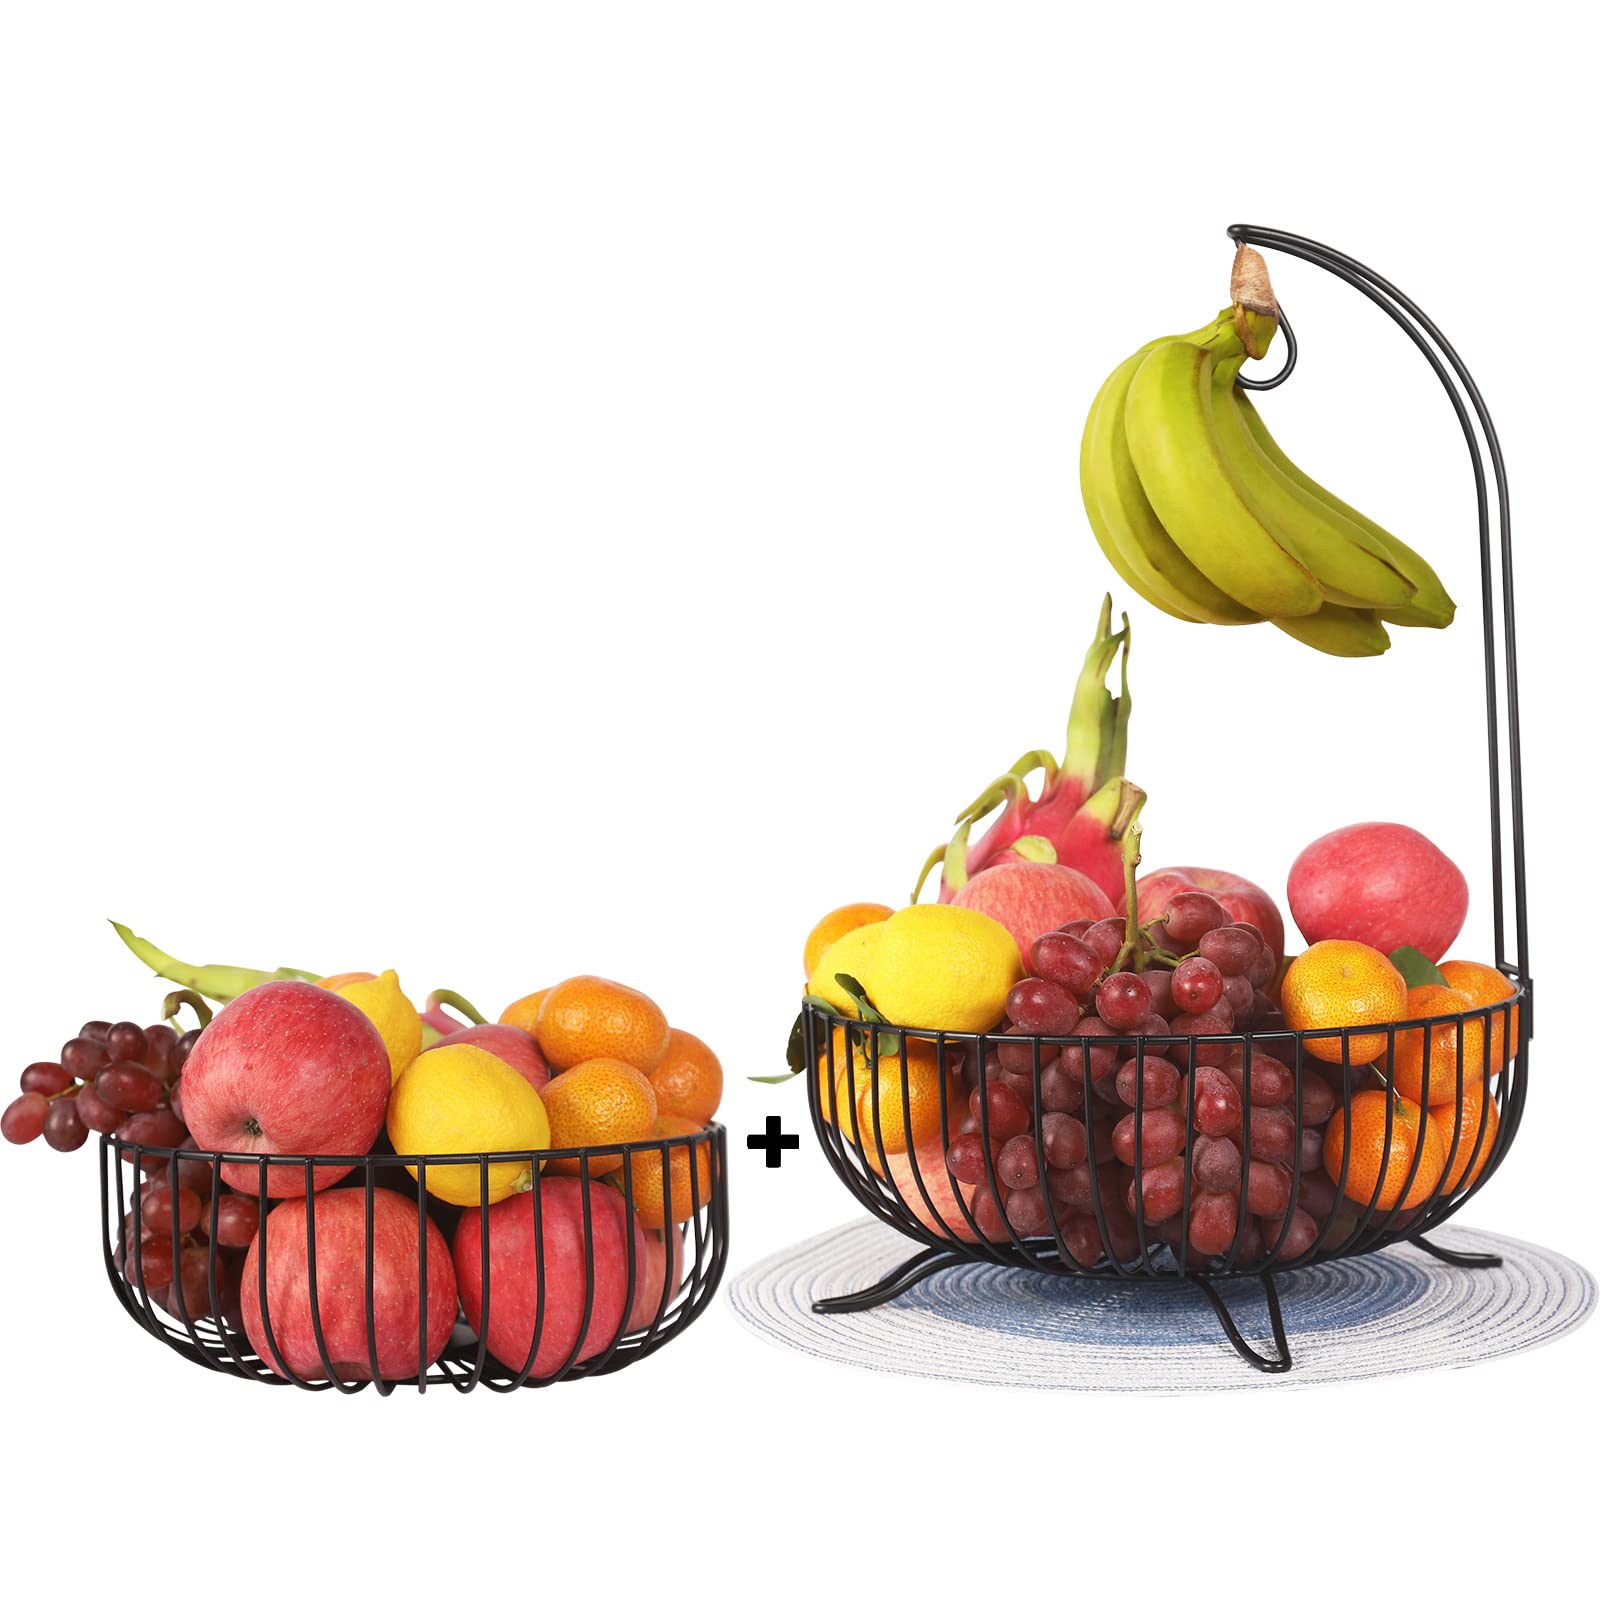 TAMAYKIM Large Fruit Bowl with Detachable Banana Tree Hanger + Medium Fruit Basket + Placemat, Fruit Bowls Vegetable Storage Fruit Stand Holder for Kitchen, Counter, Countertop